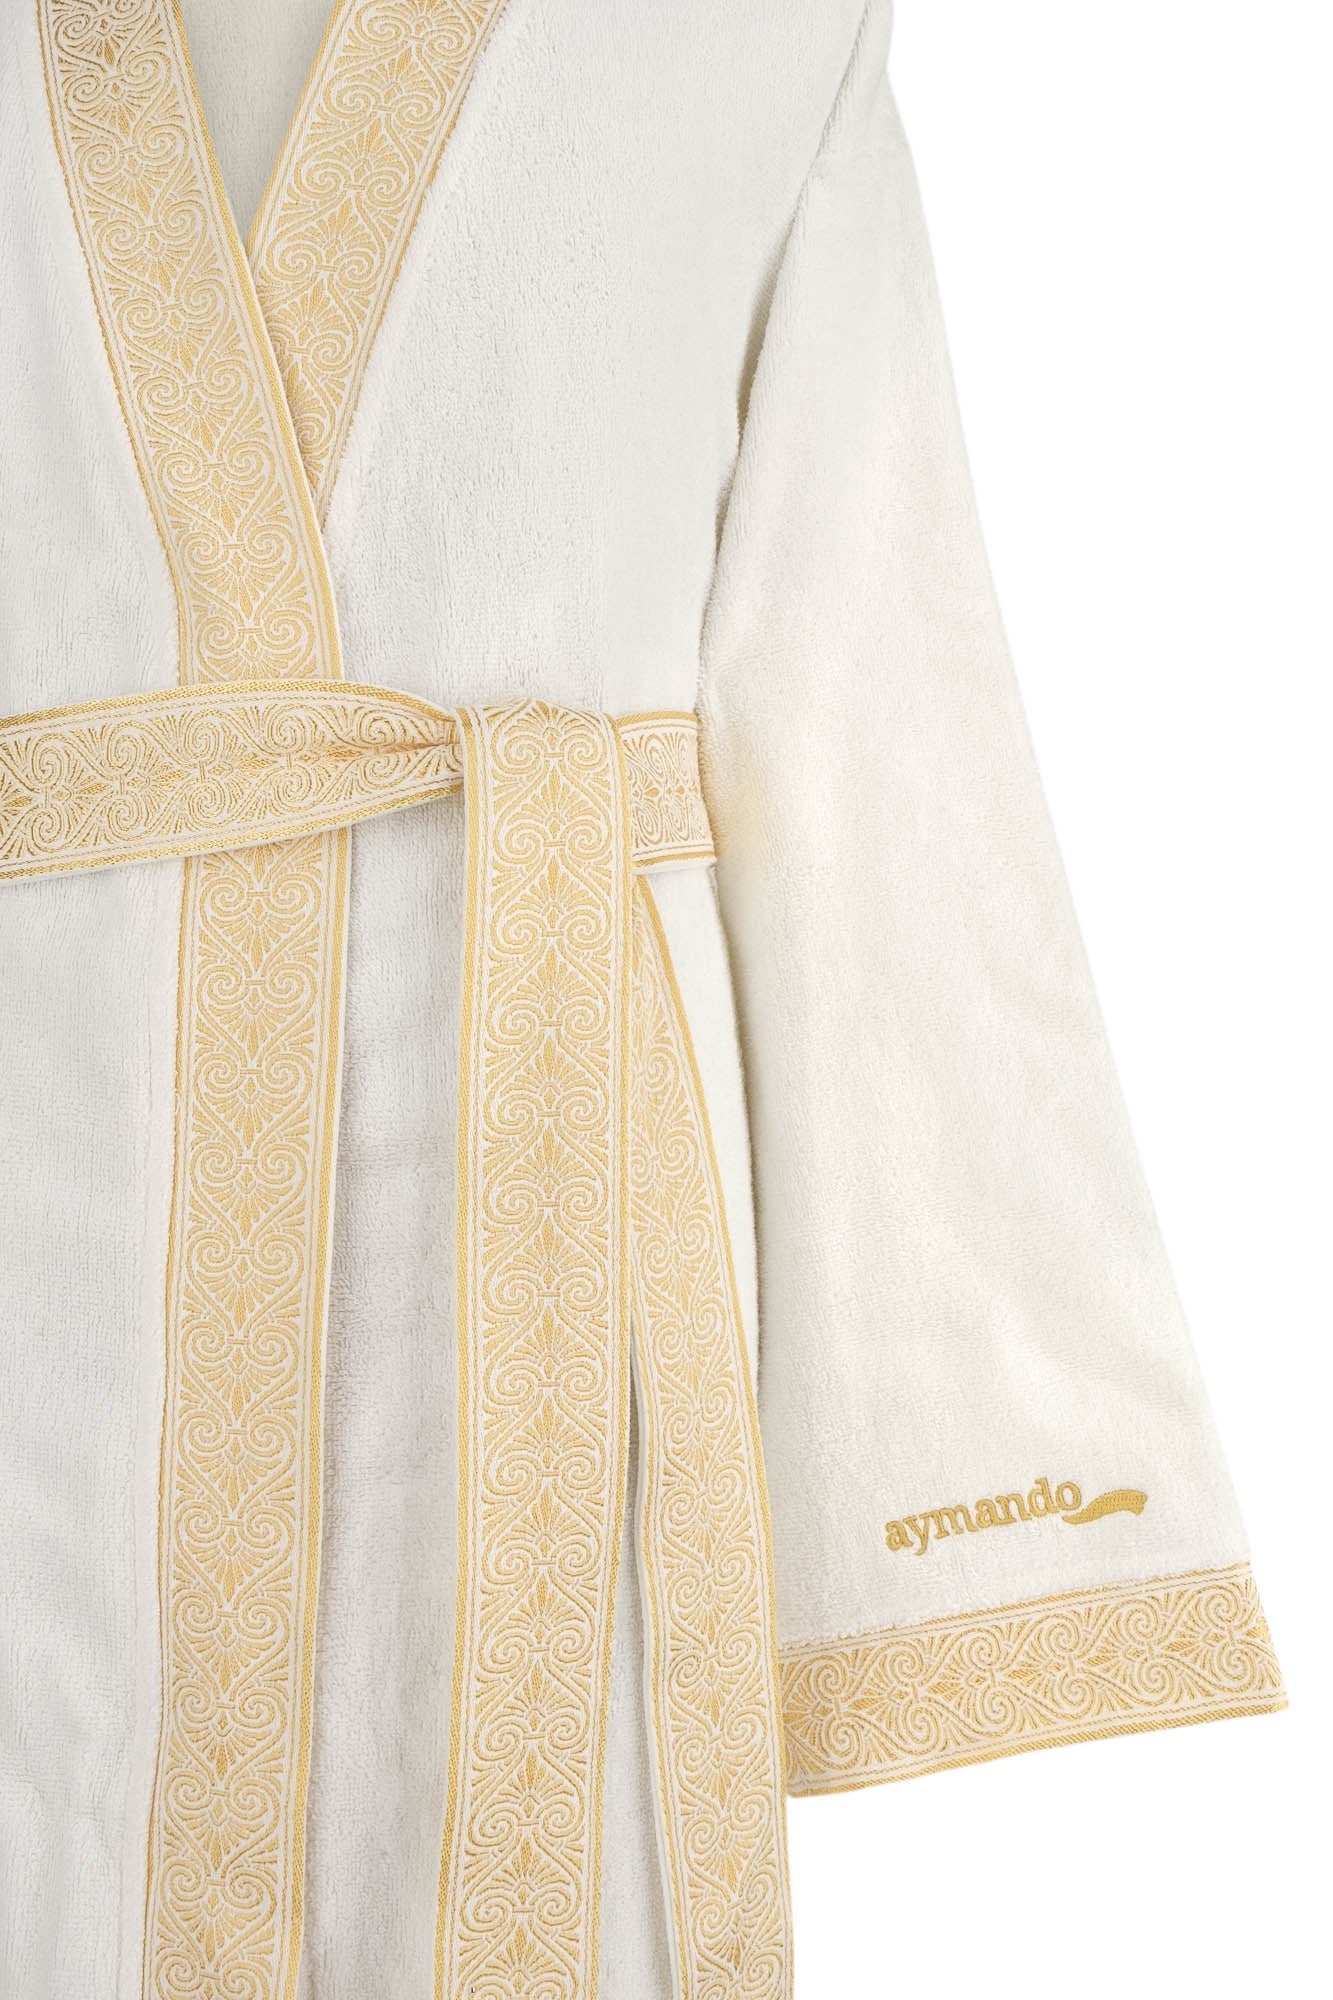 Luxus Bademantel Kimono Weiß-Gold